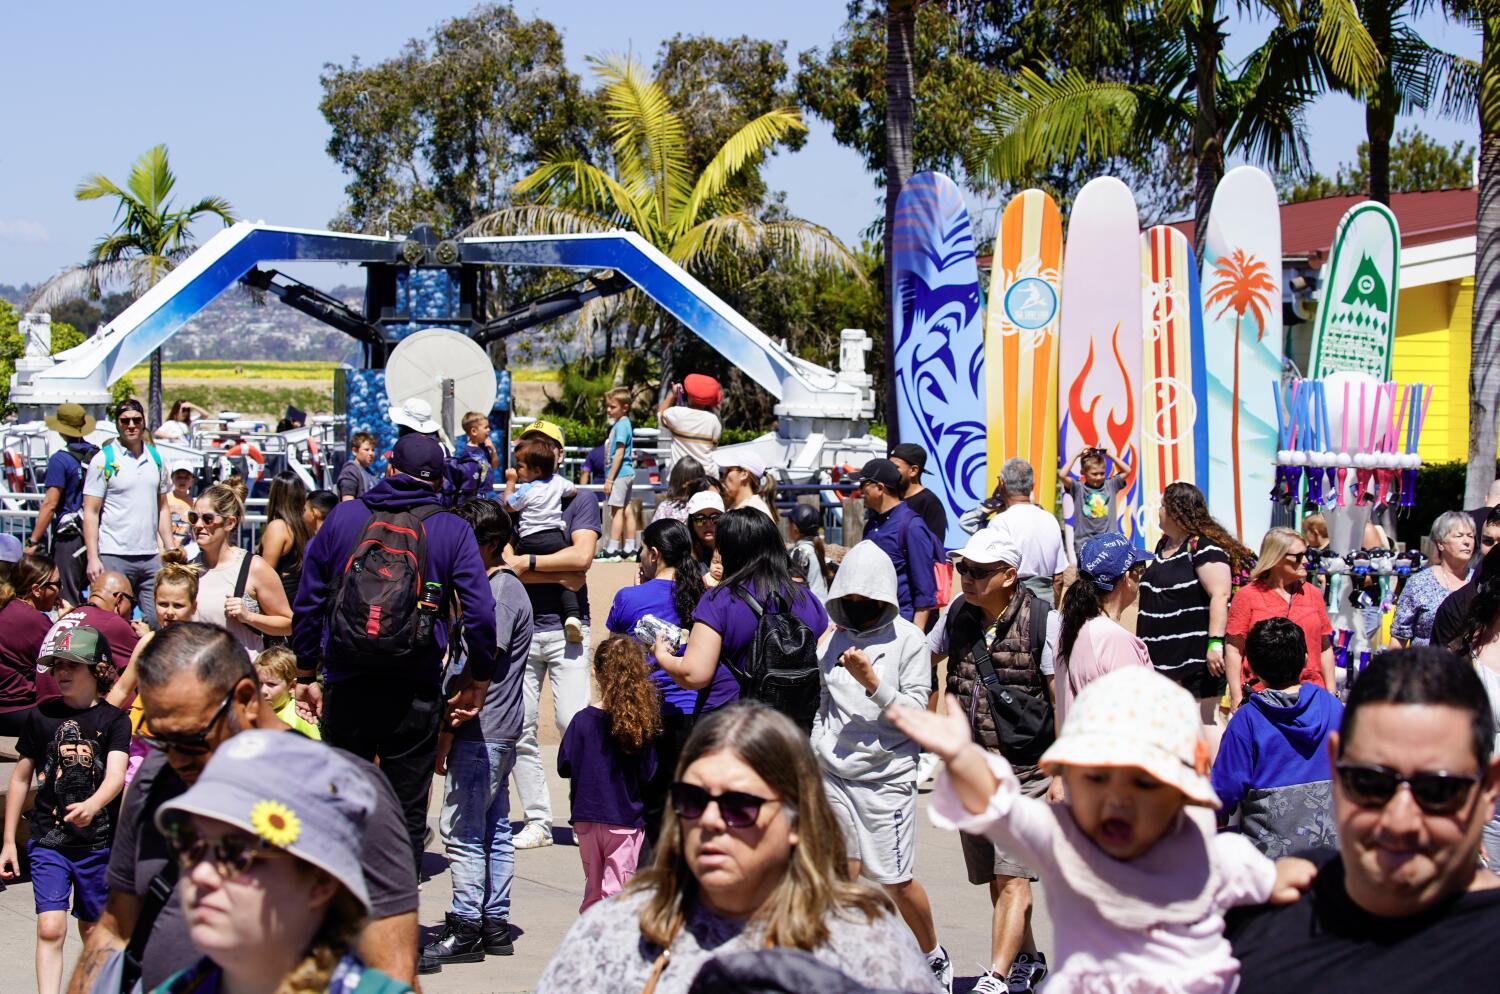 Crowds of people visiting SeaWorld during spring break.